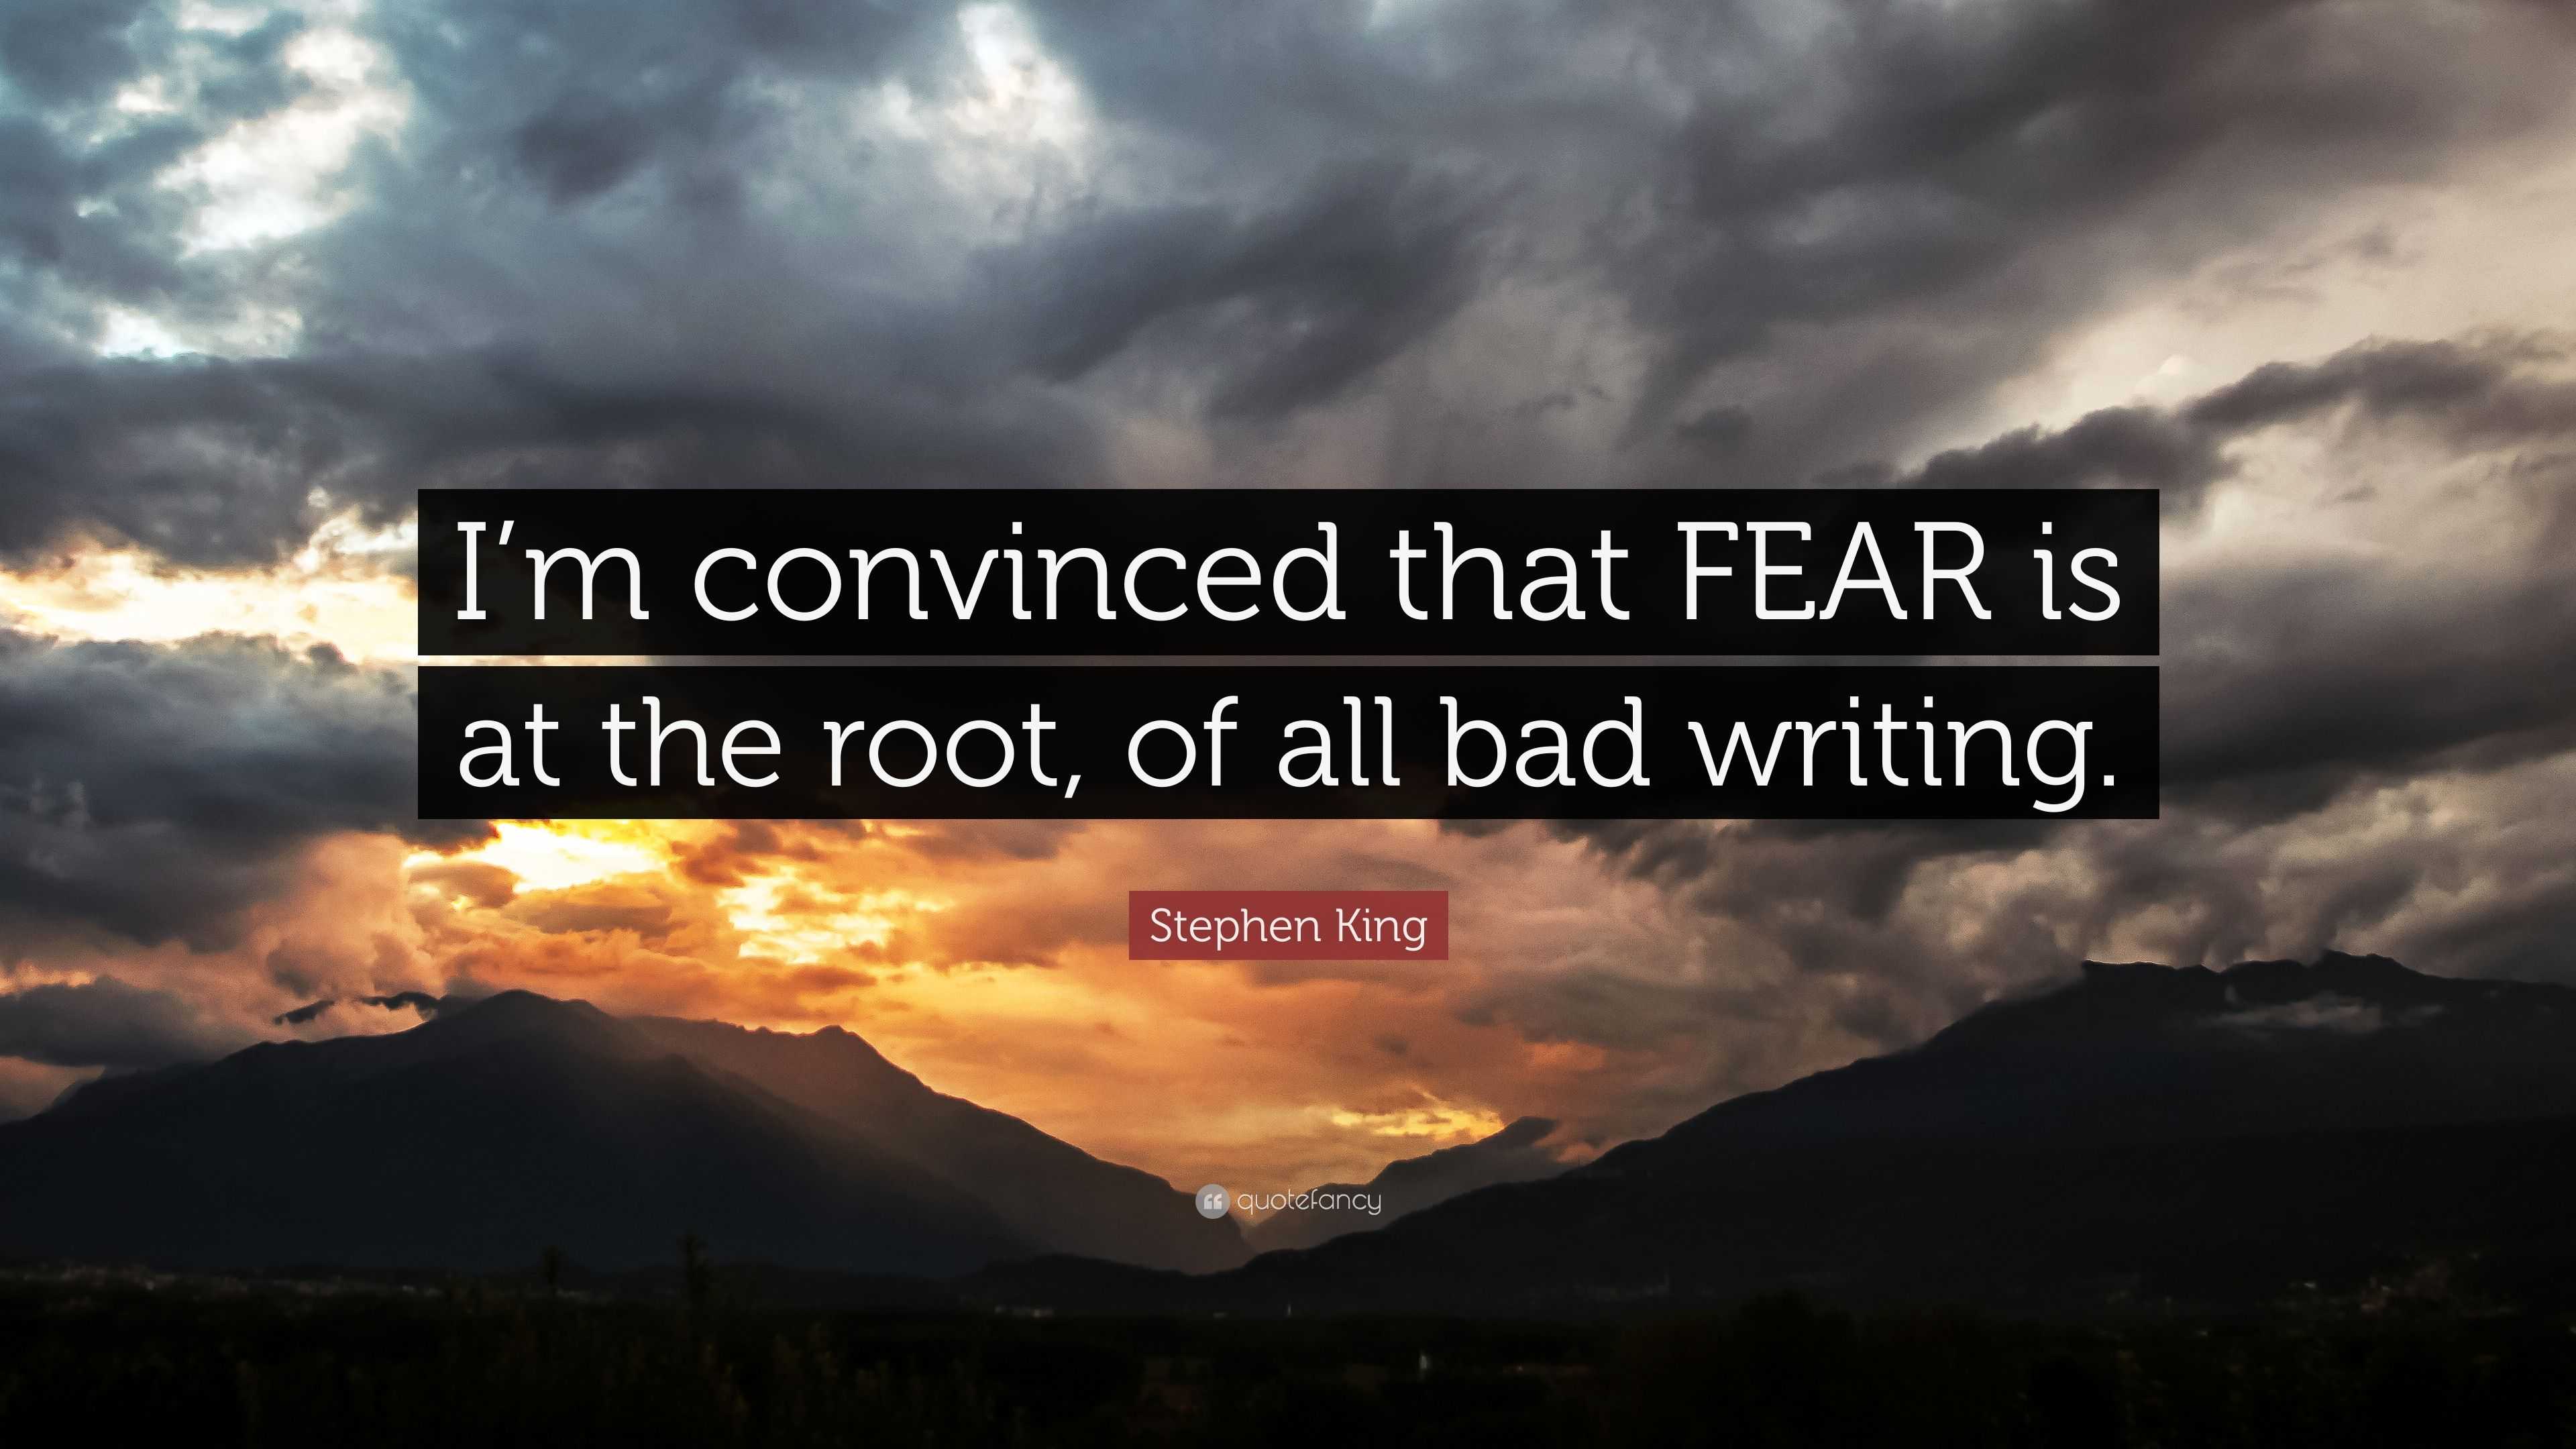 stephen king essay on fear